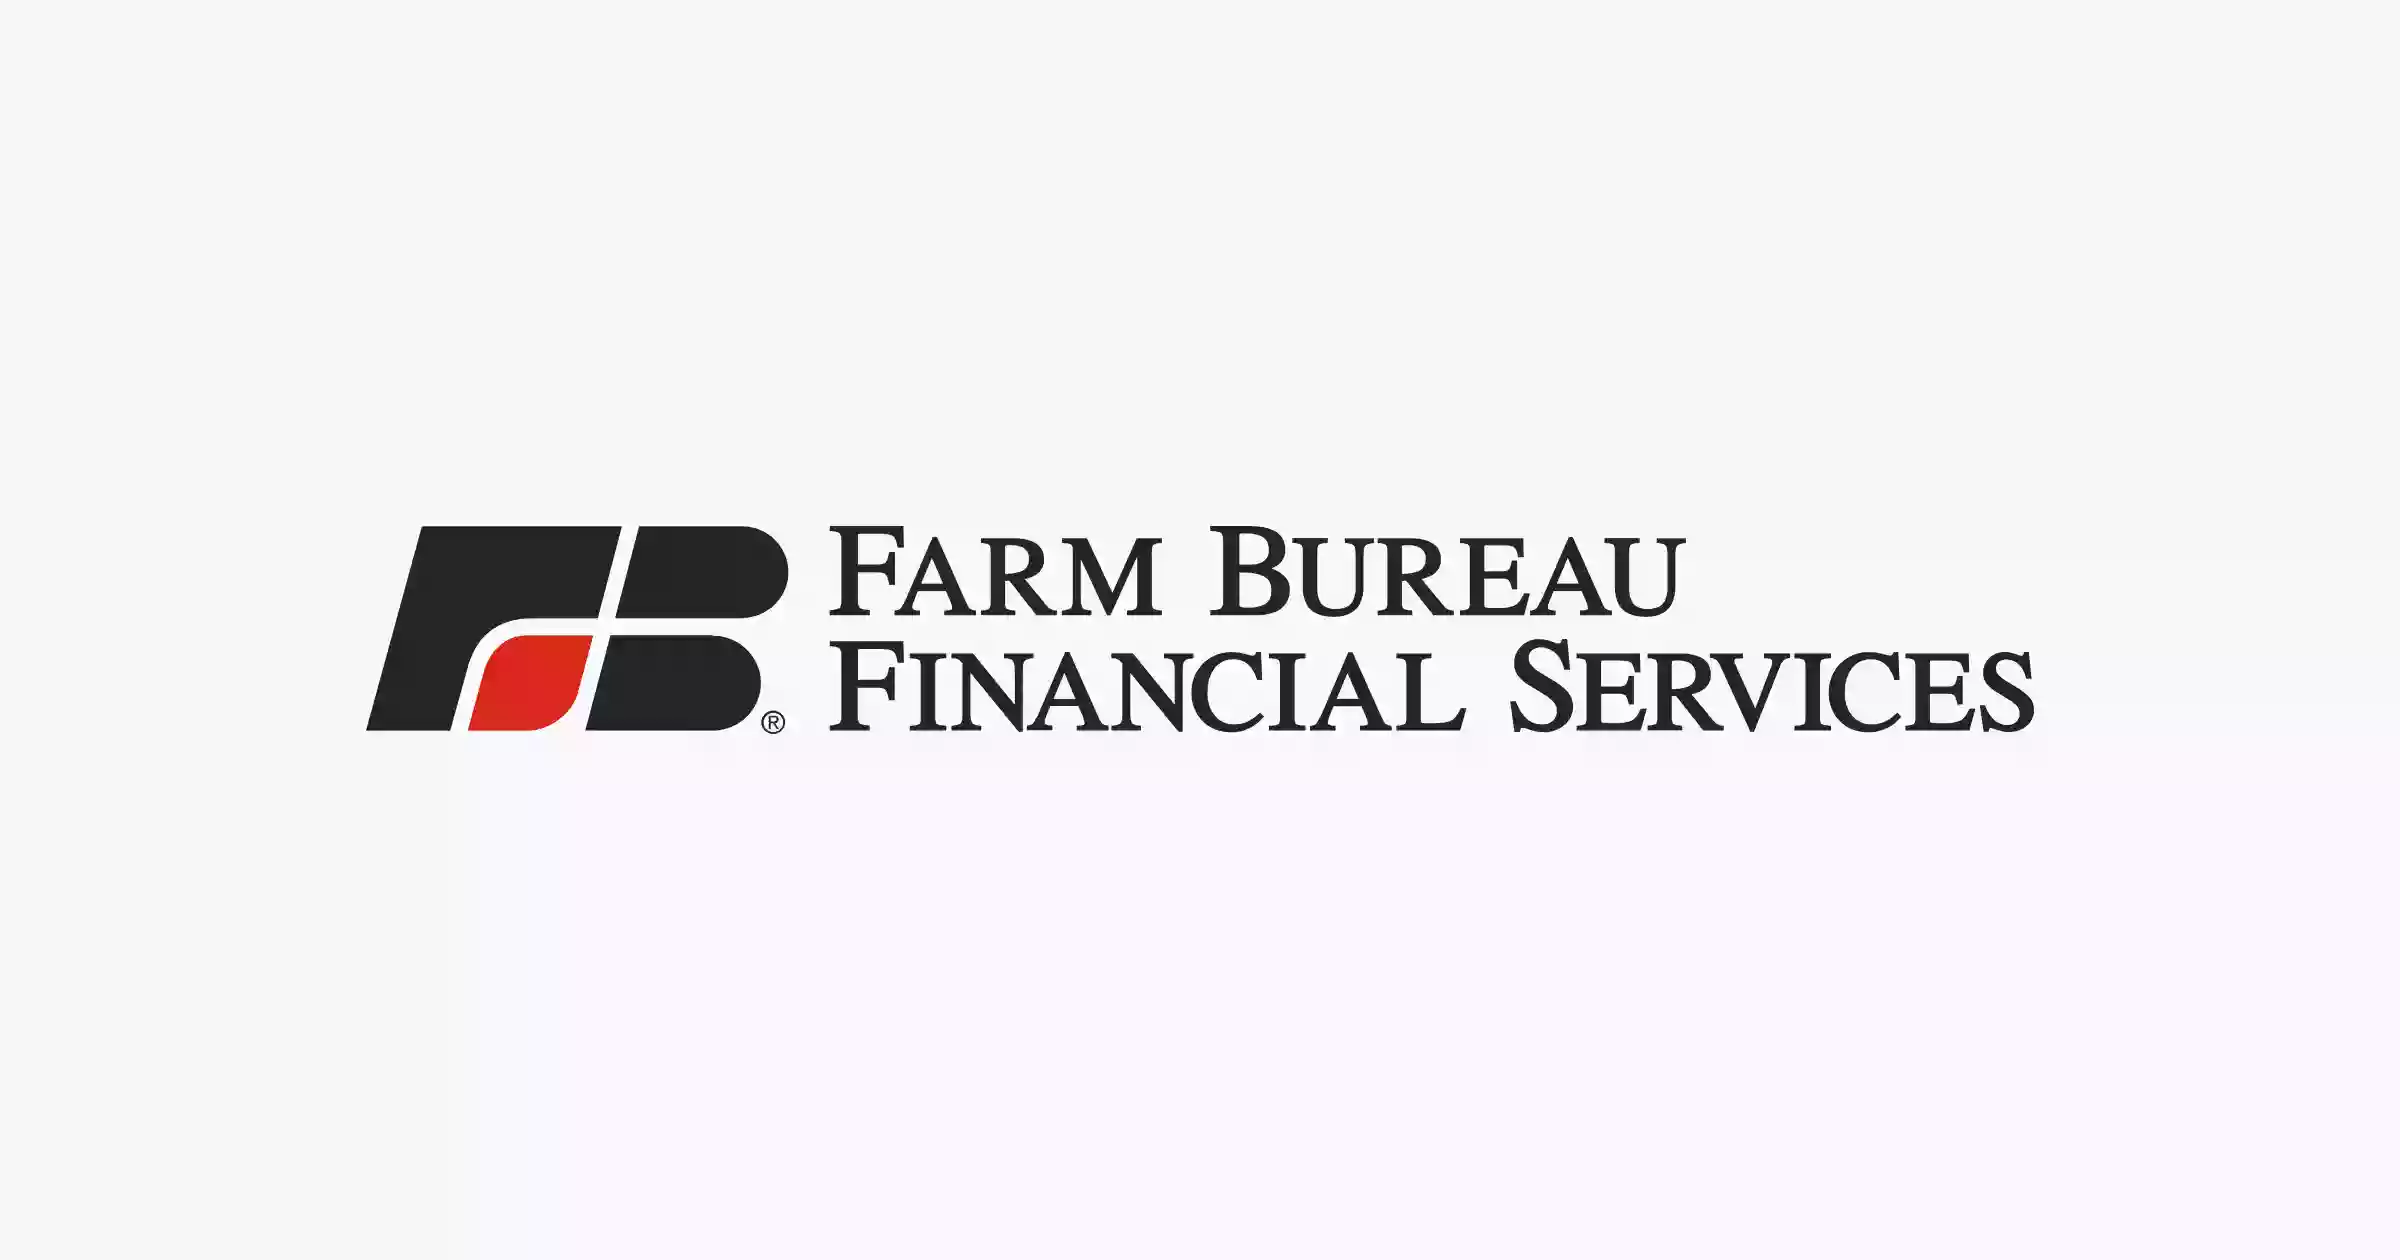 Farm Bureau Financial Services: Ed Bridwell